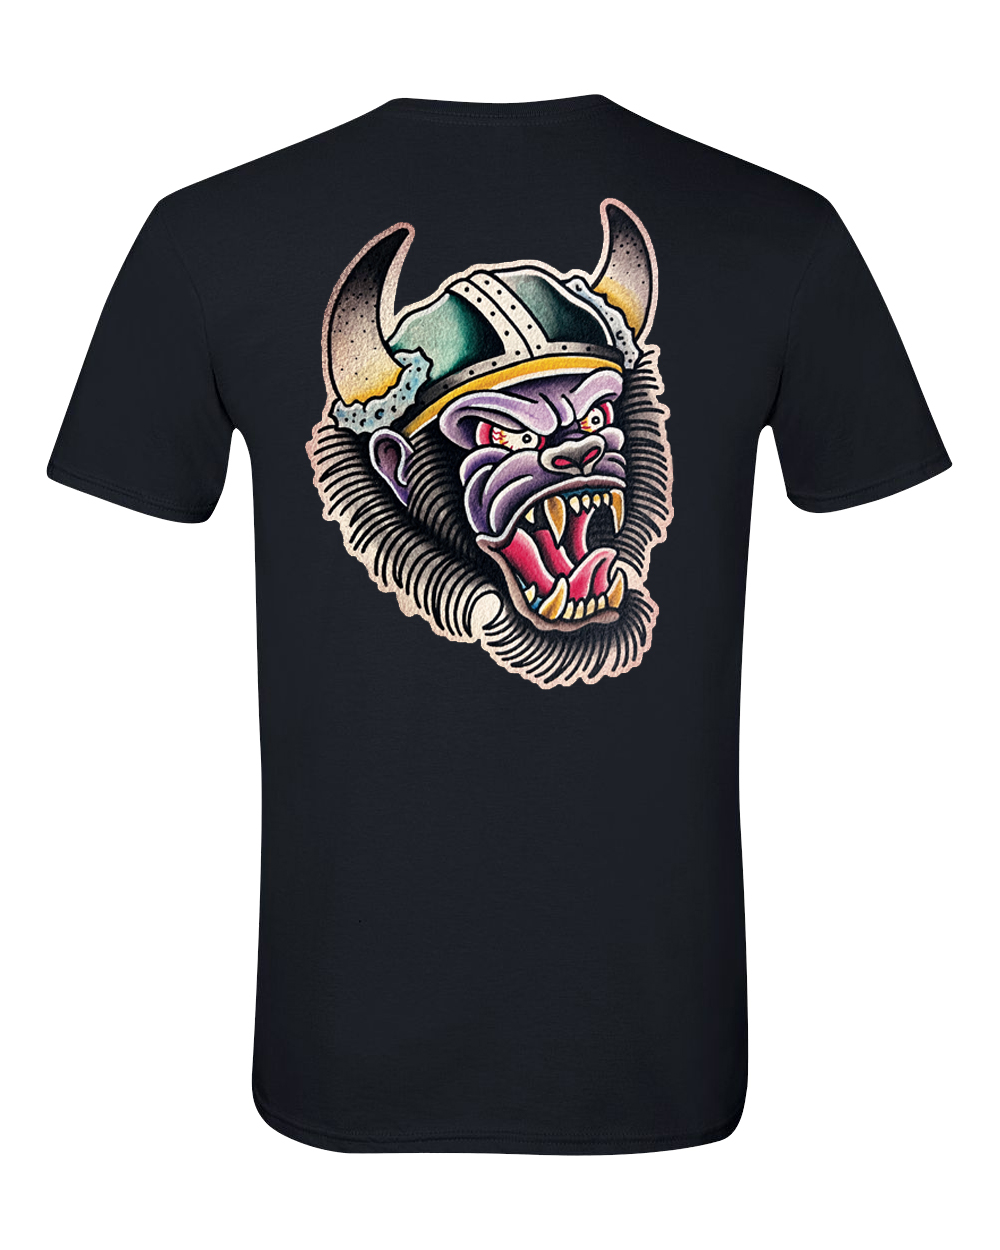 Marcus Dove “Viking Gorilla” Unisex T-Shirt